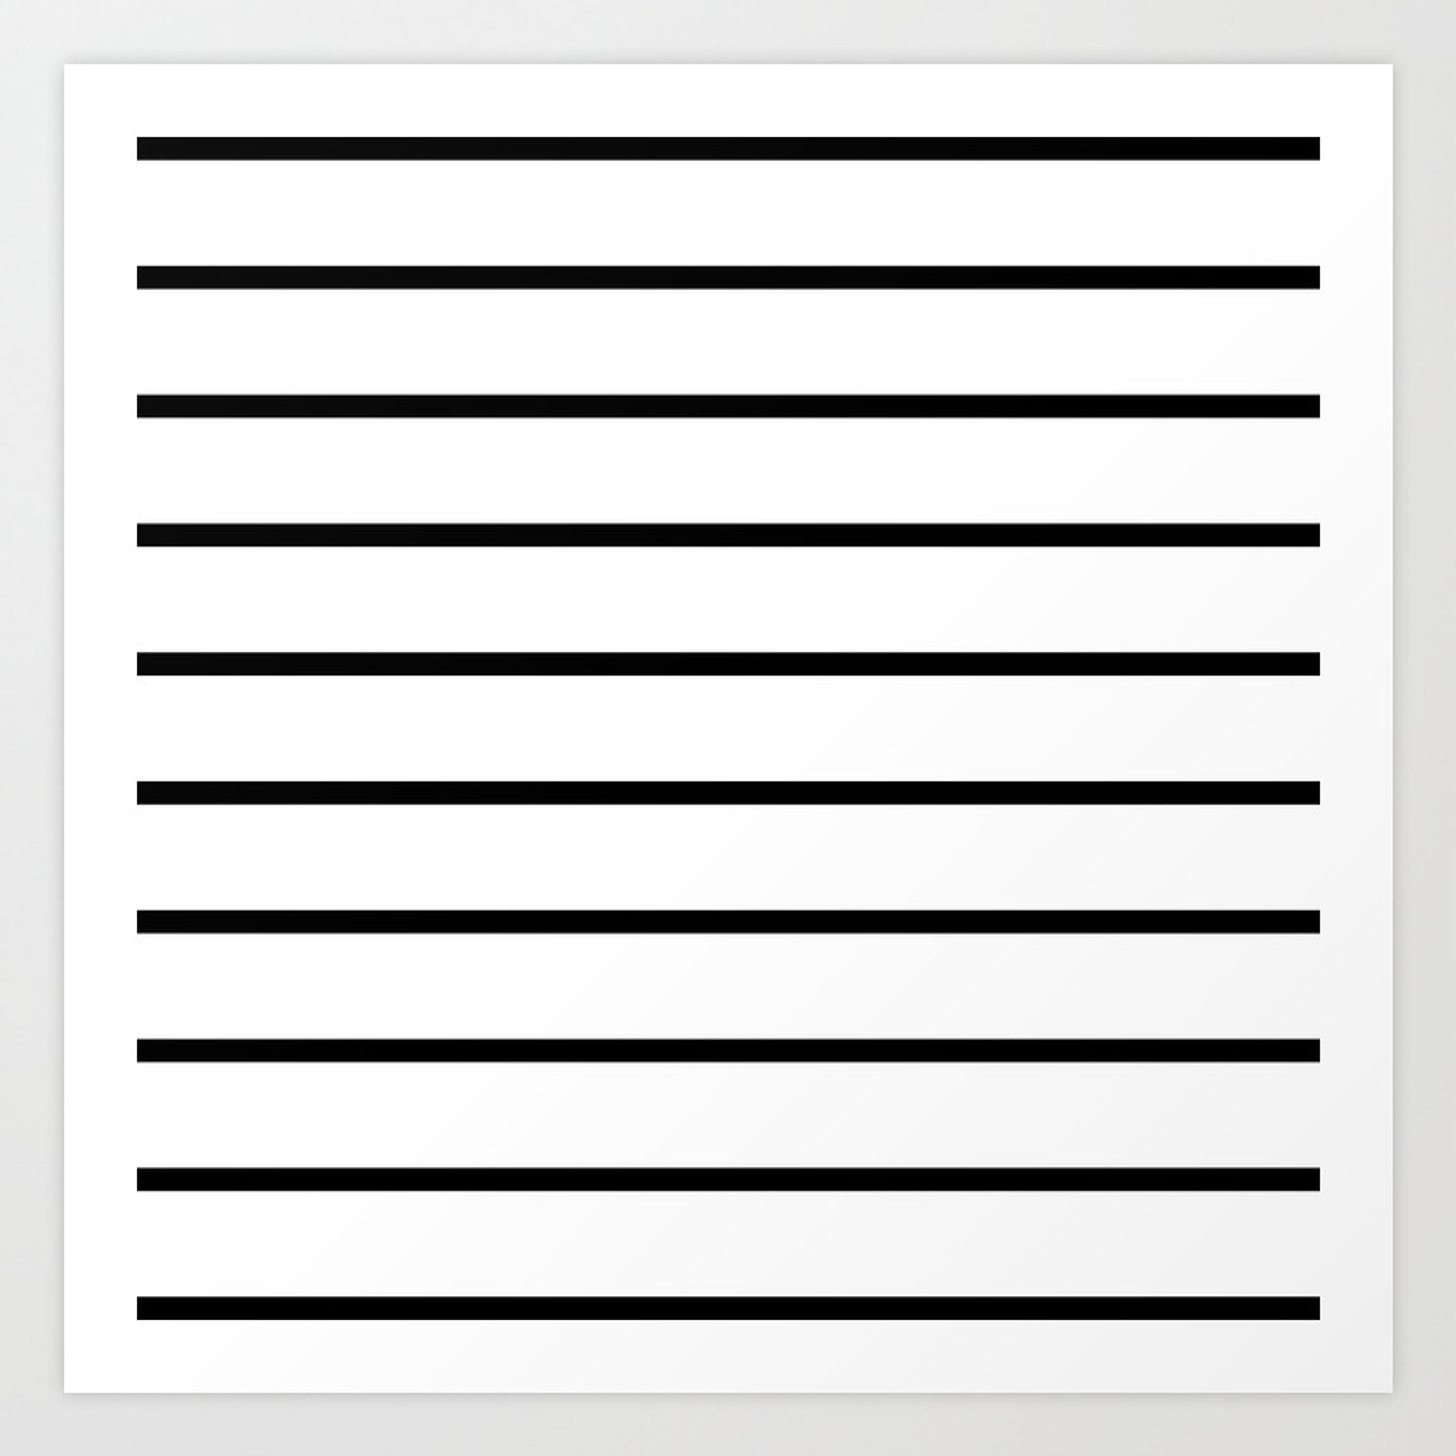 Horizontal Lines (Black & White Pattern) Art Print by LXLBX8 | Society6